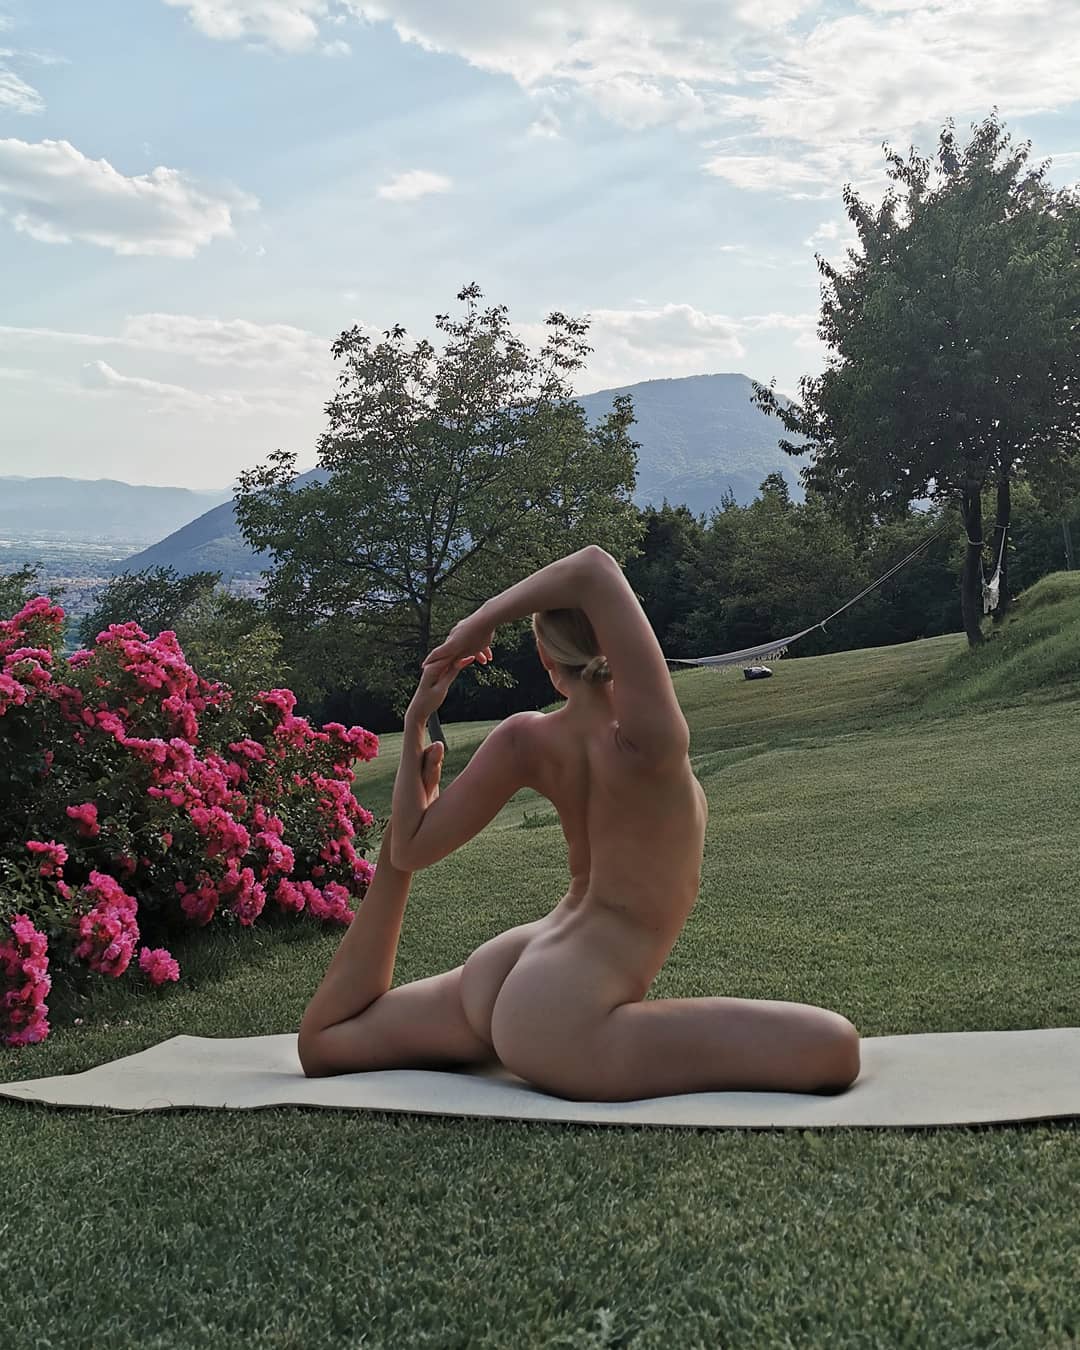 Porn Yoga Indonesia - Sexy yoga girl pubic vk â€” Homemade XXX Pics